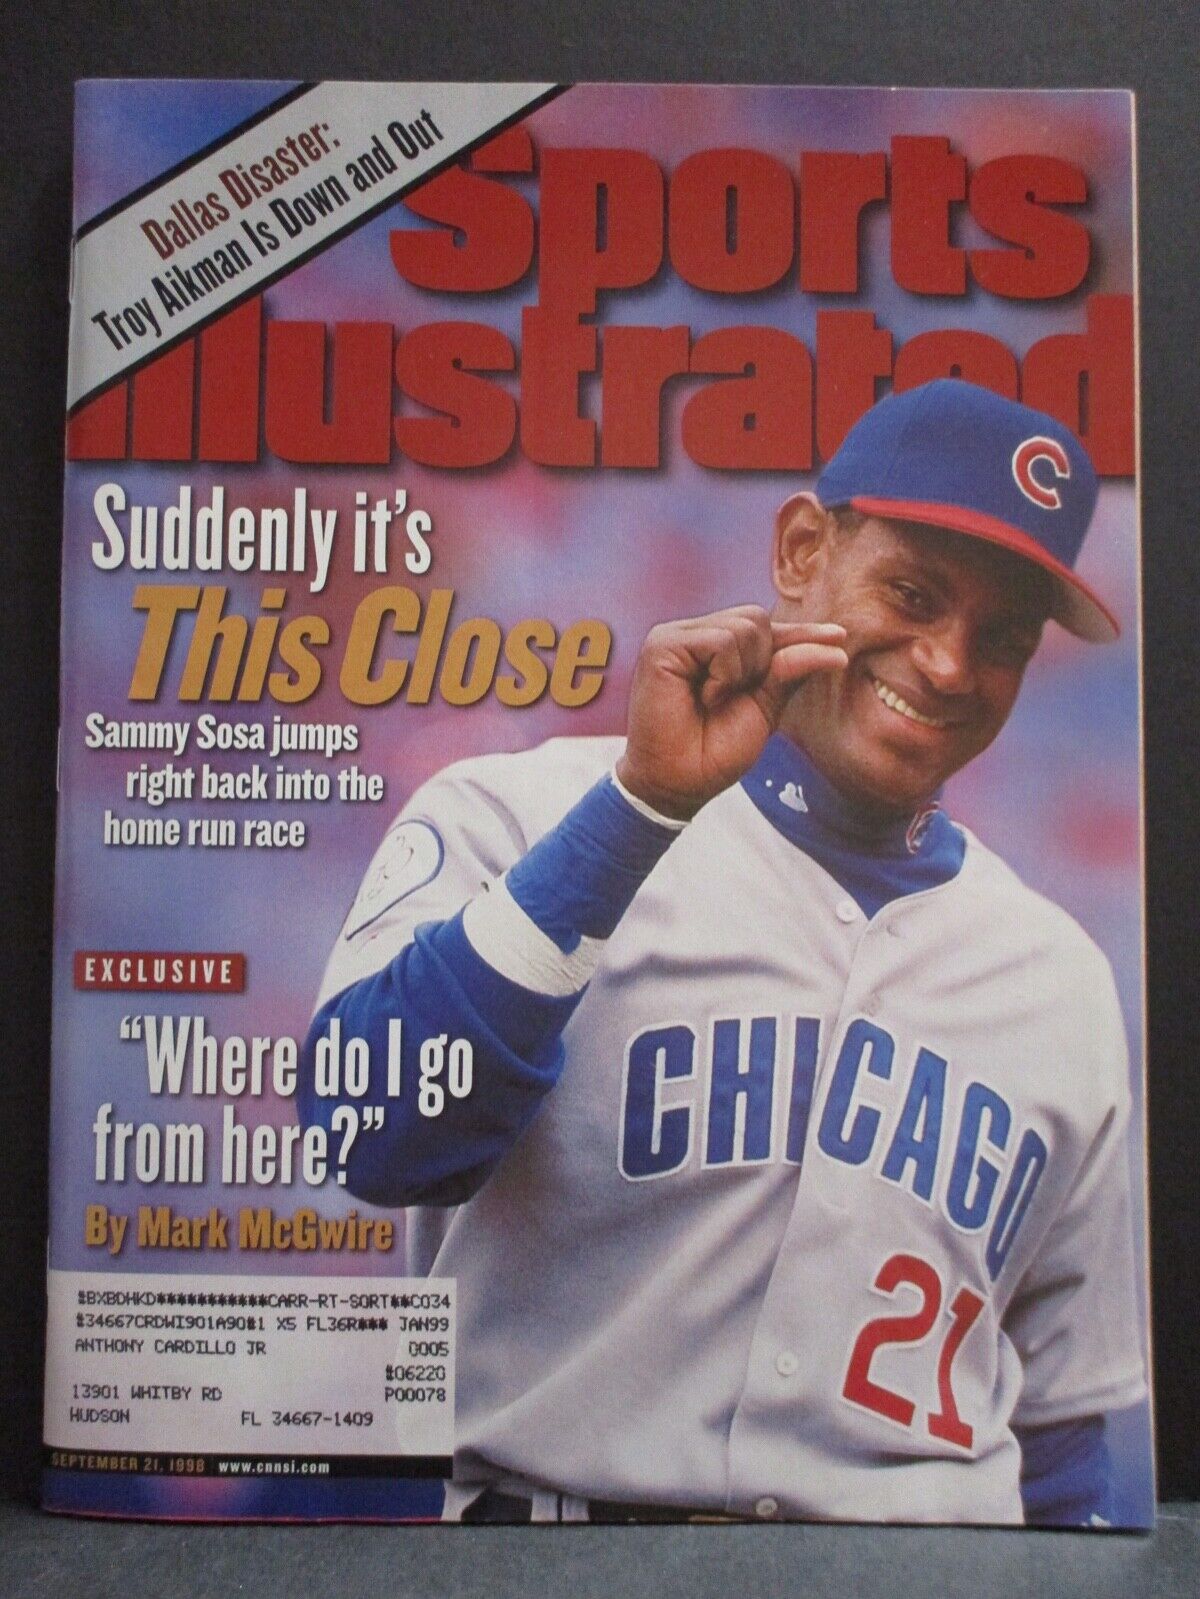 Sports Illustrated September 21 1998 Magazine Cubs Sammy Sosa Cover Ship. Label